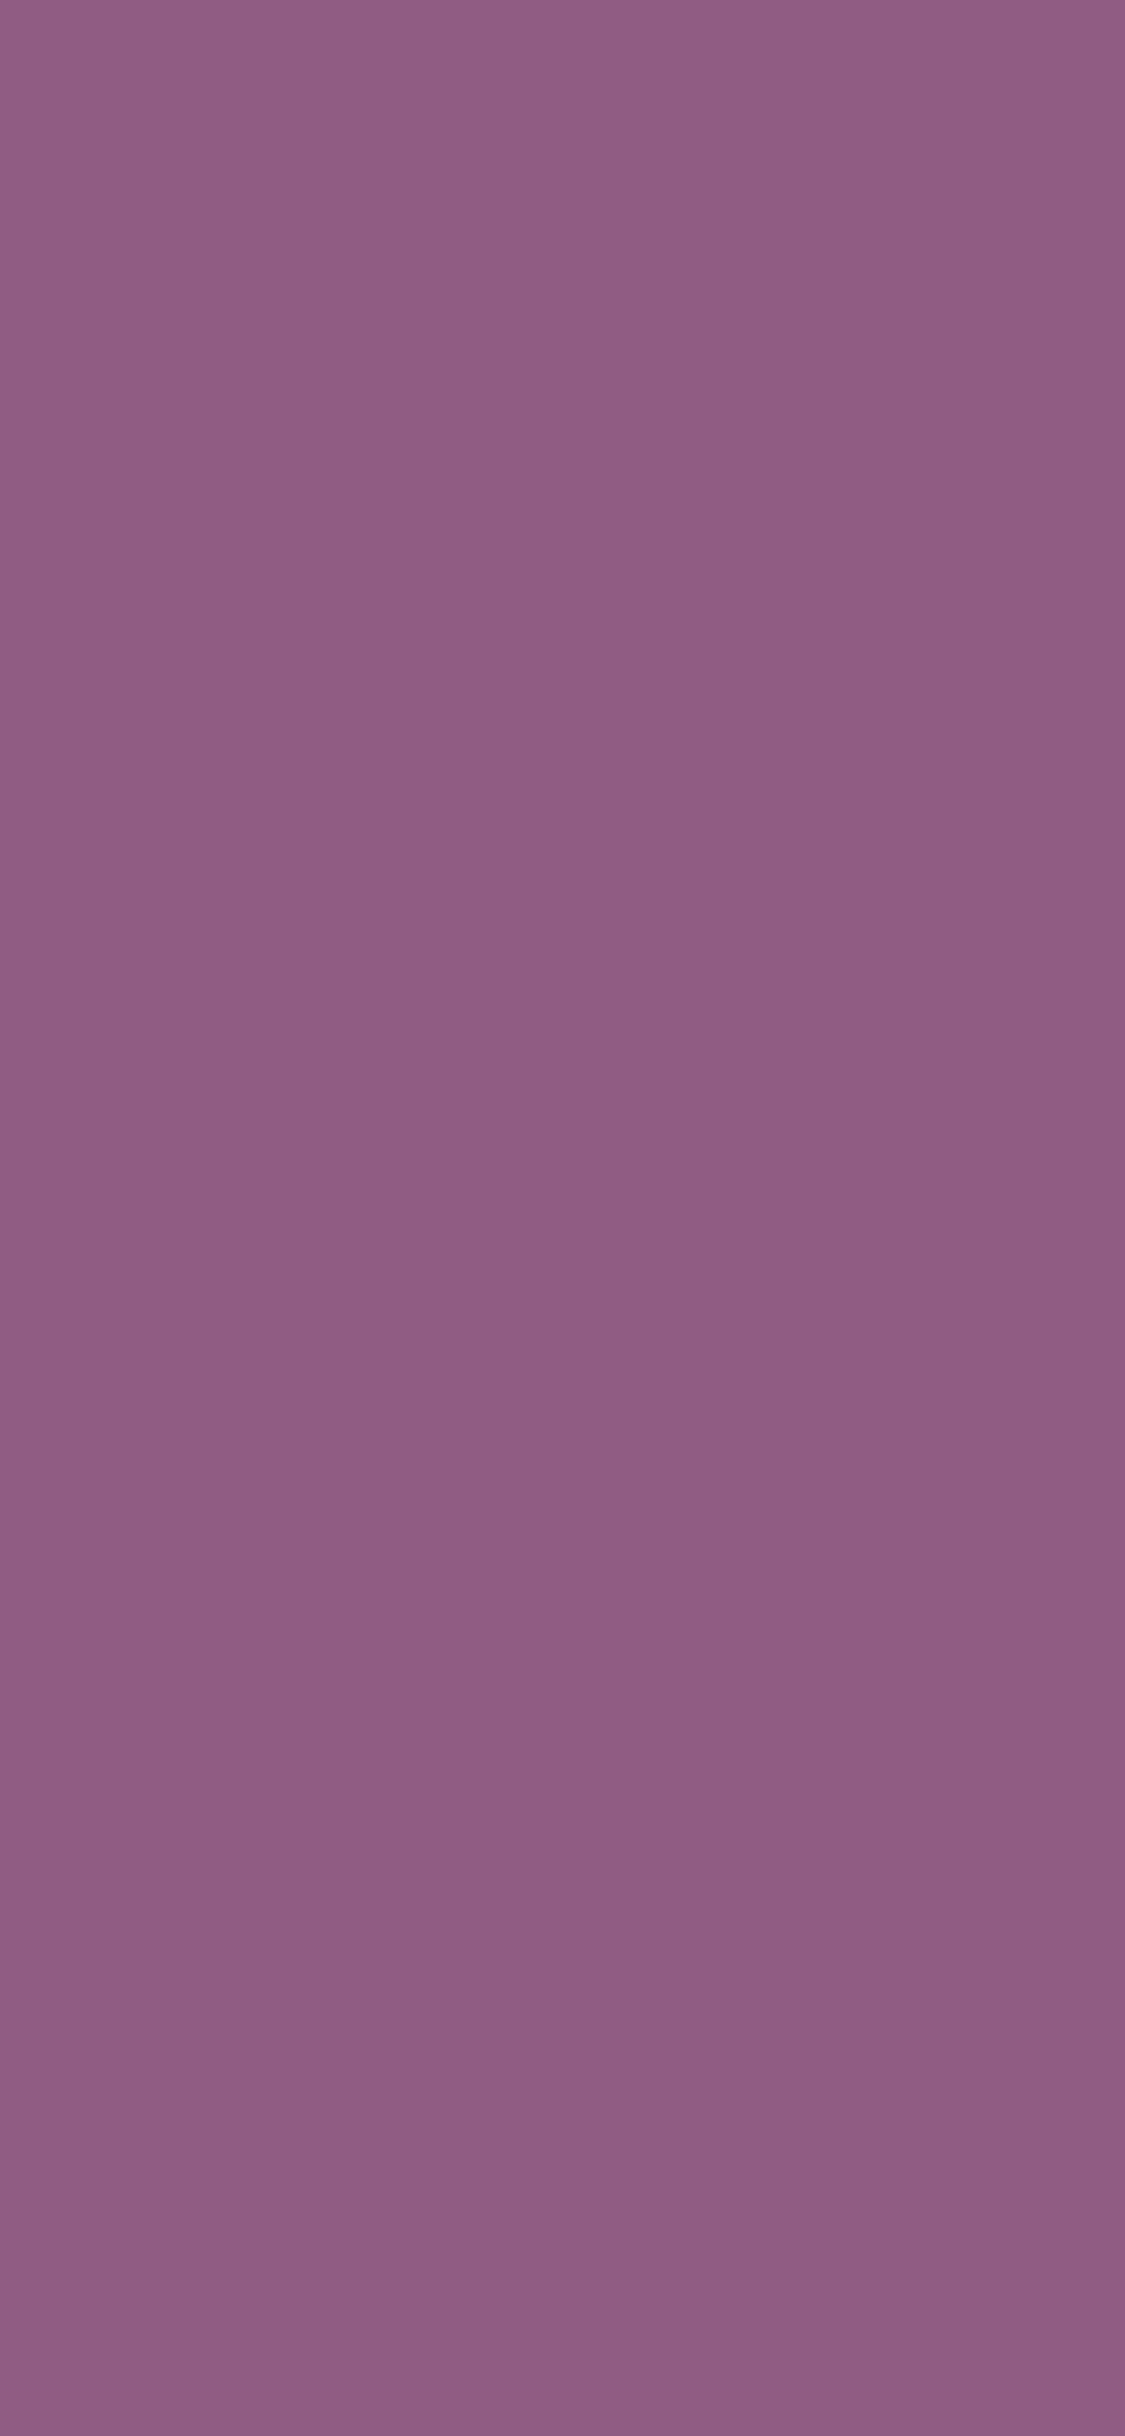 1125x2436 Antique Fuchsia Solid Color Background